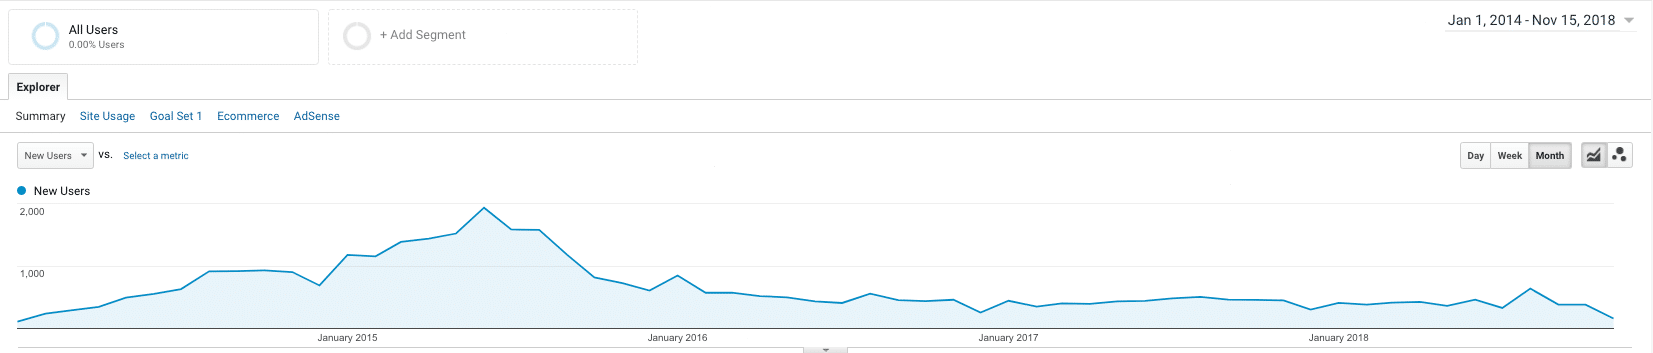 Blogging results Jan 2014-Nov 15 2018